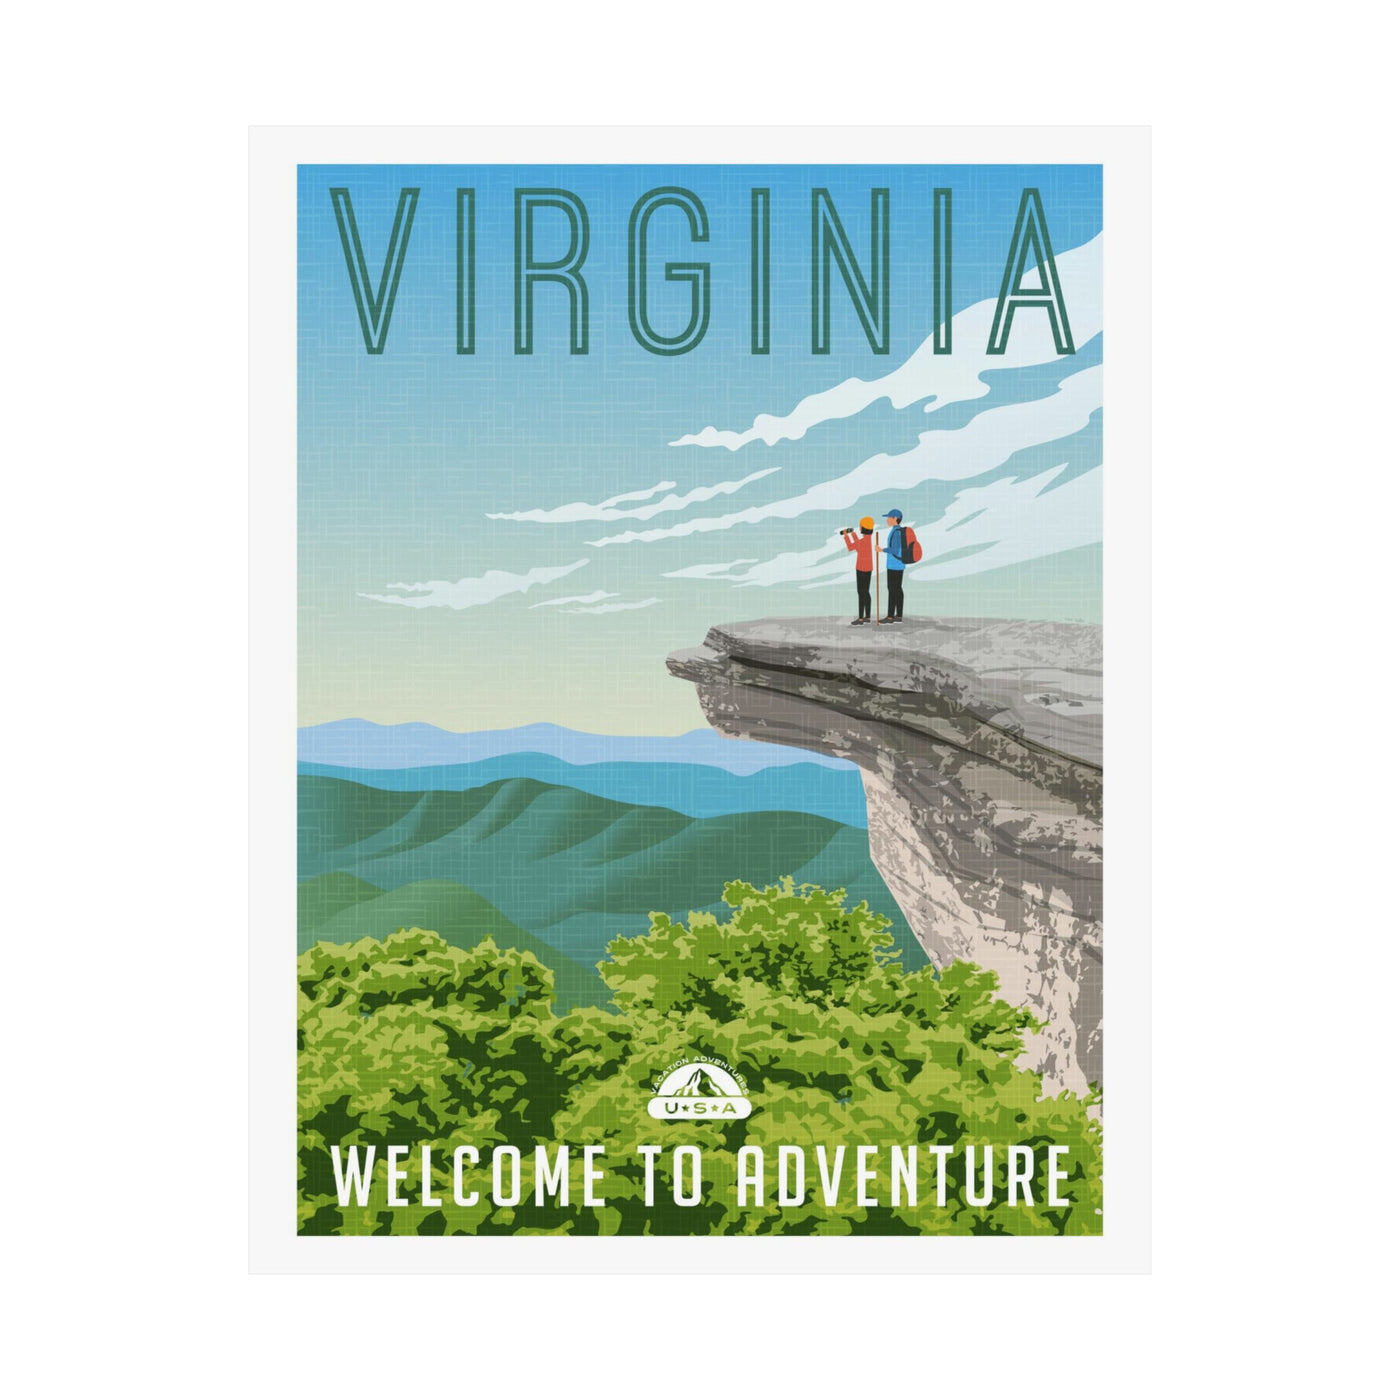 Virginia Travel Poster - Ezra's Clothing